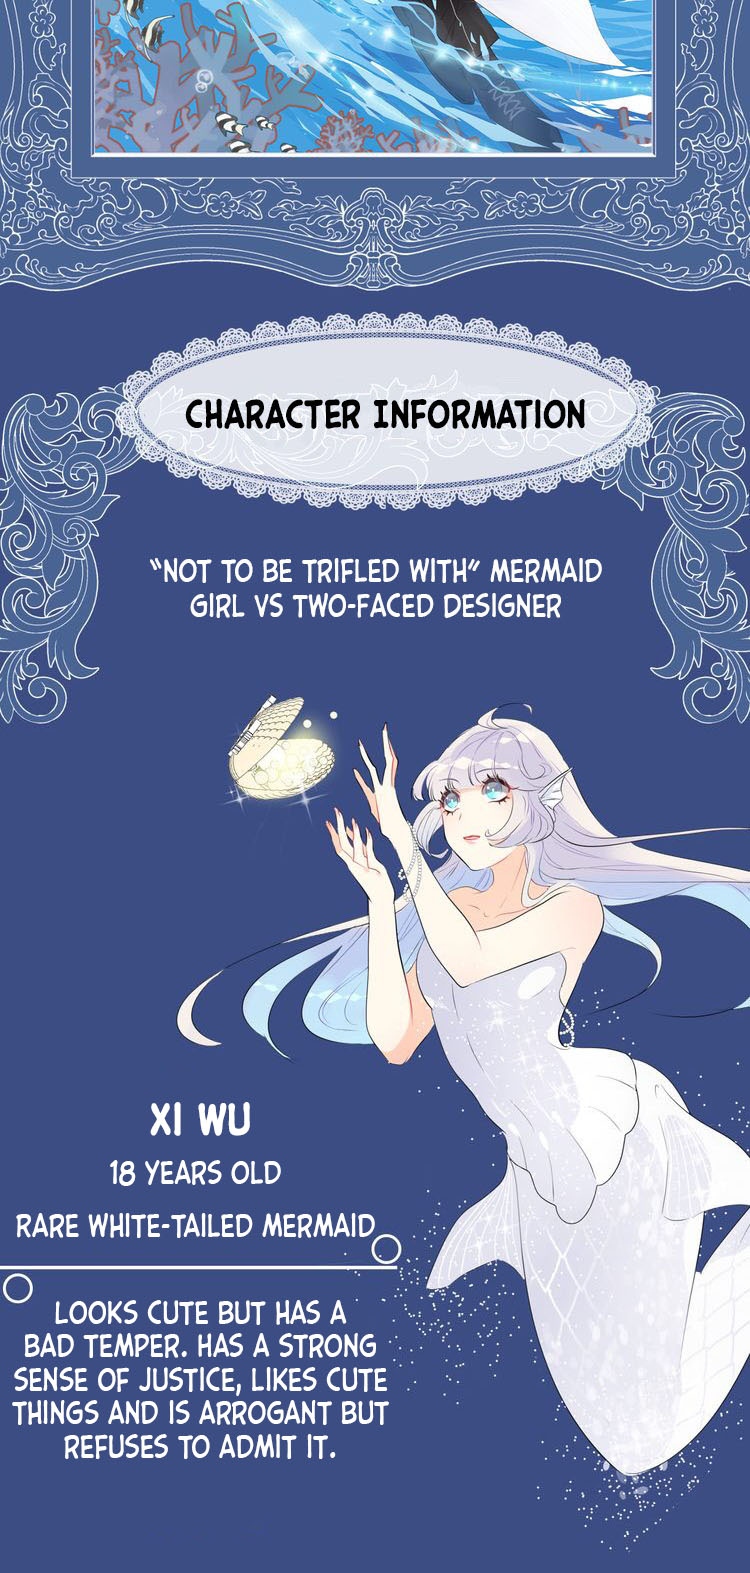 The Mermaid Wears a Dress Ch. 0 Prologue 0.1